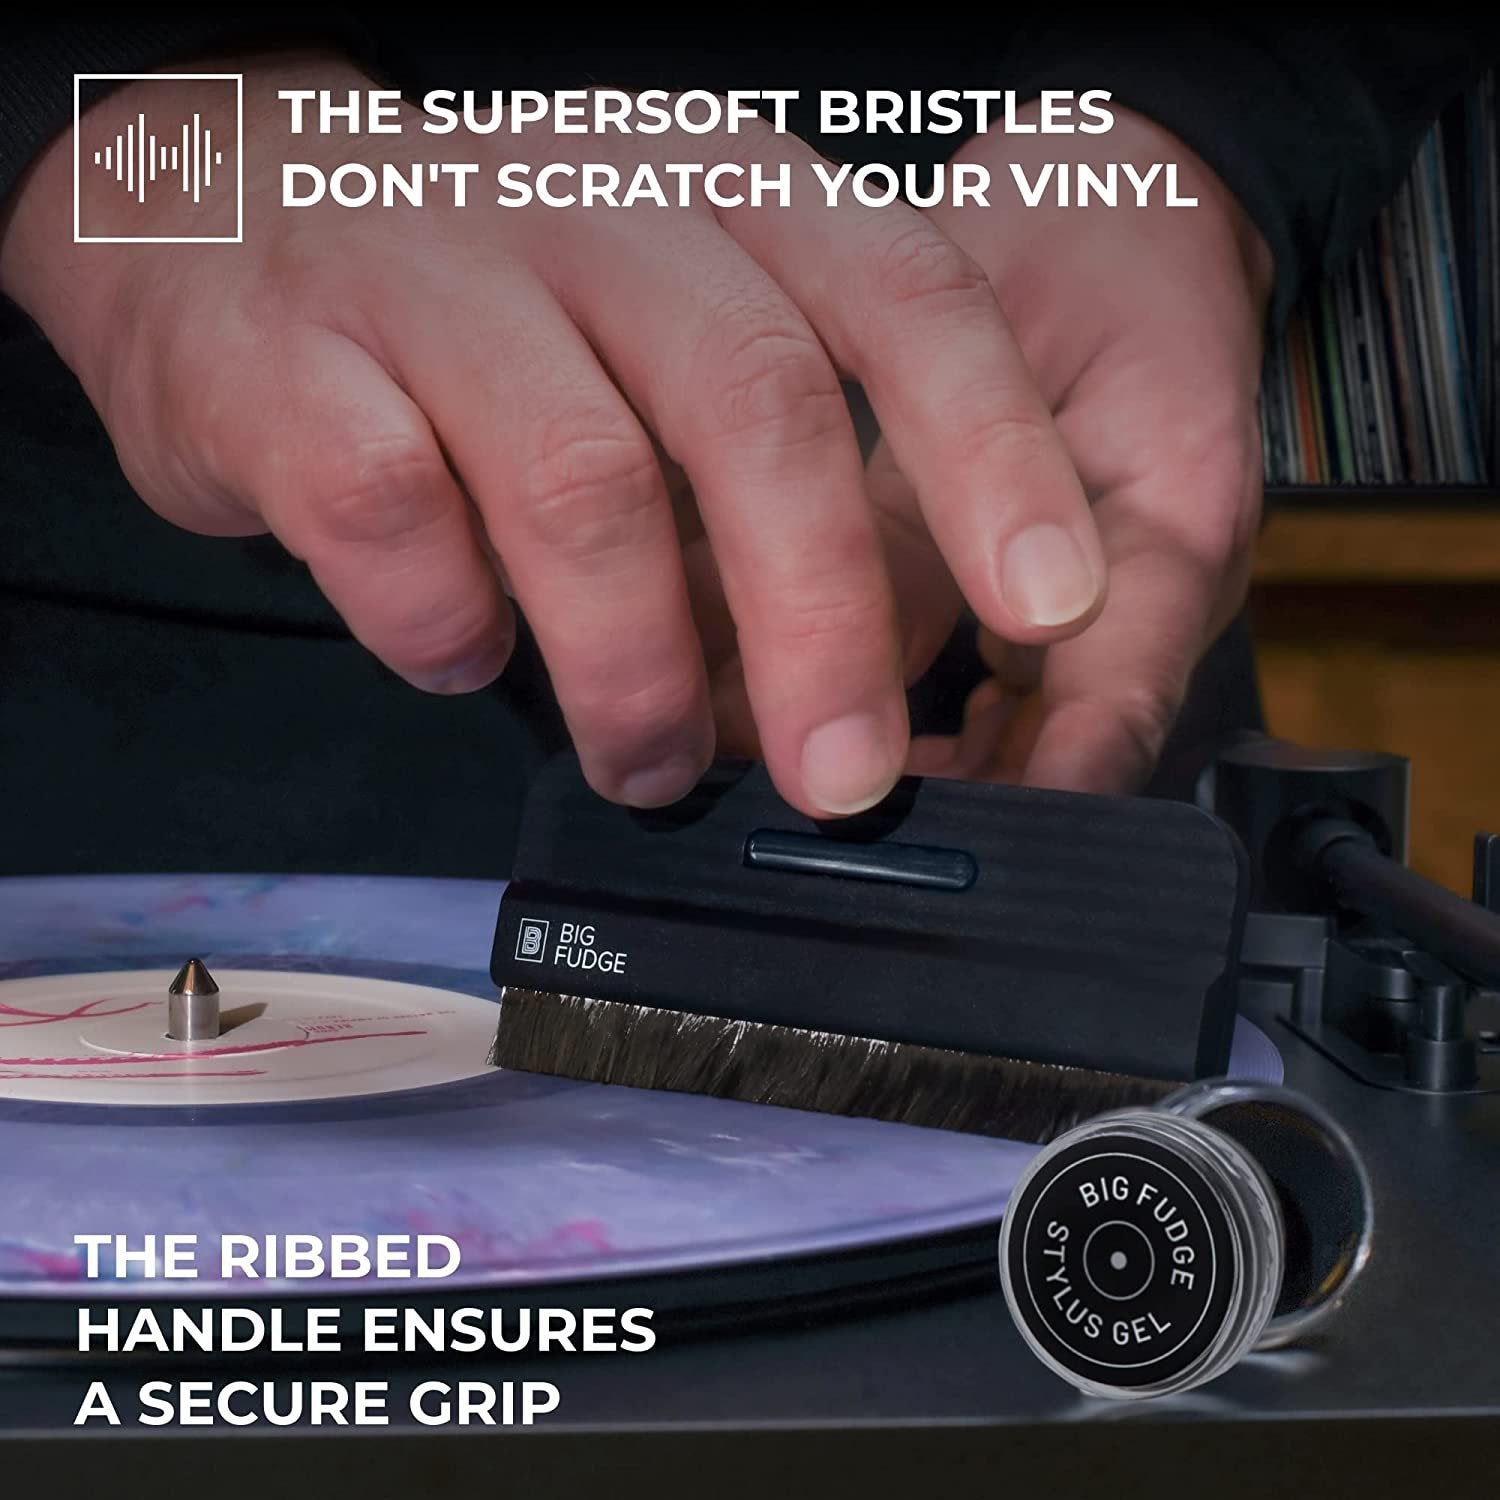 Supersoft-bristles-don't-scratch-vinyl